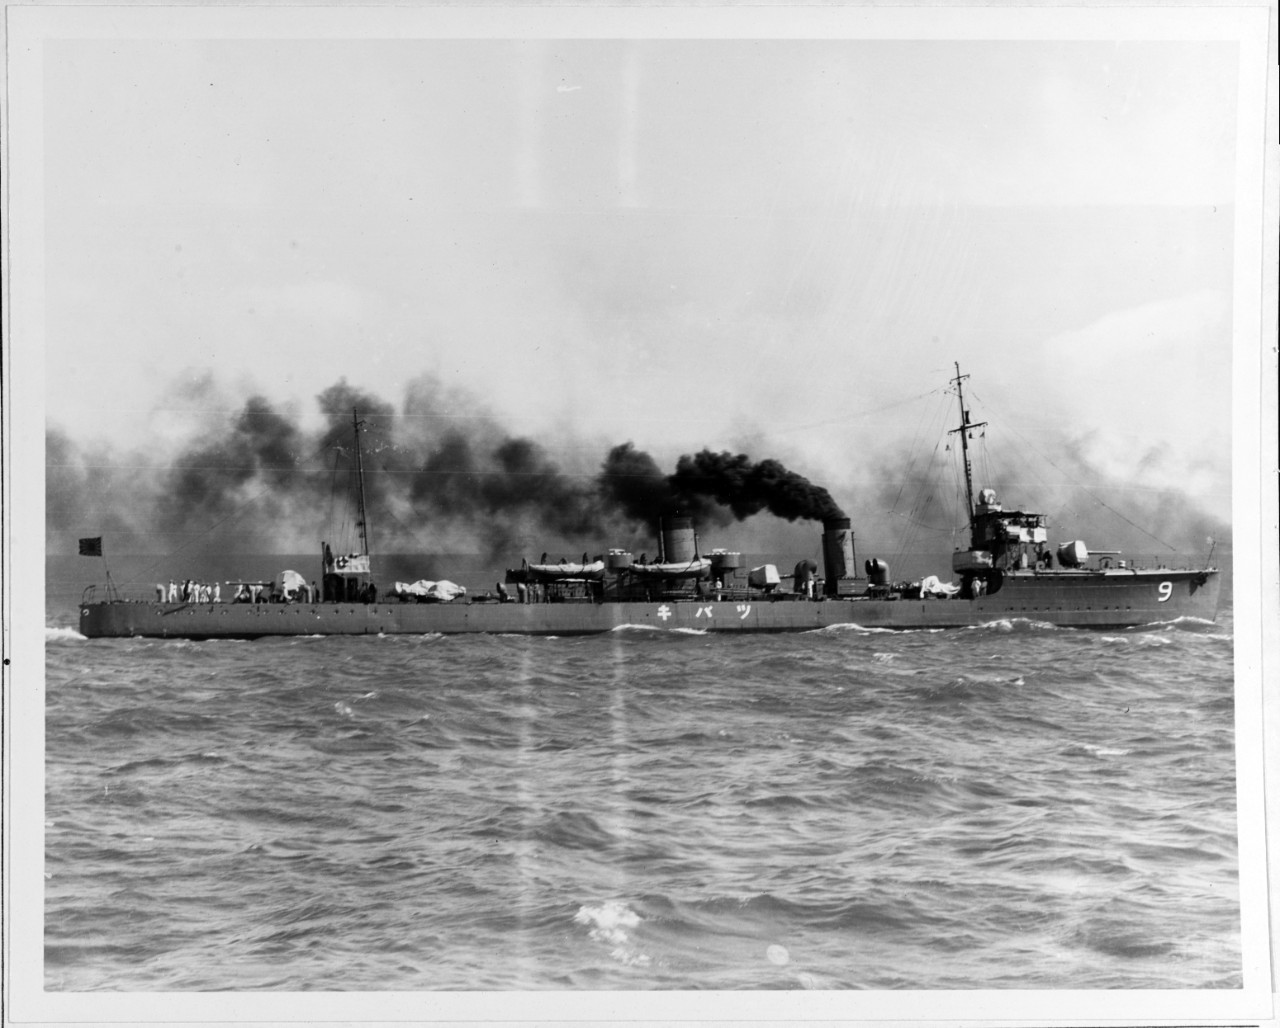 TSUBAKI, Japanese destroyer